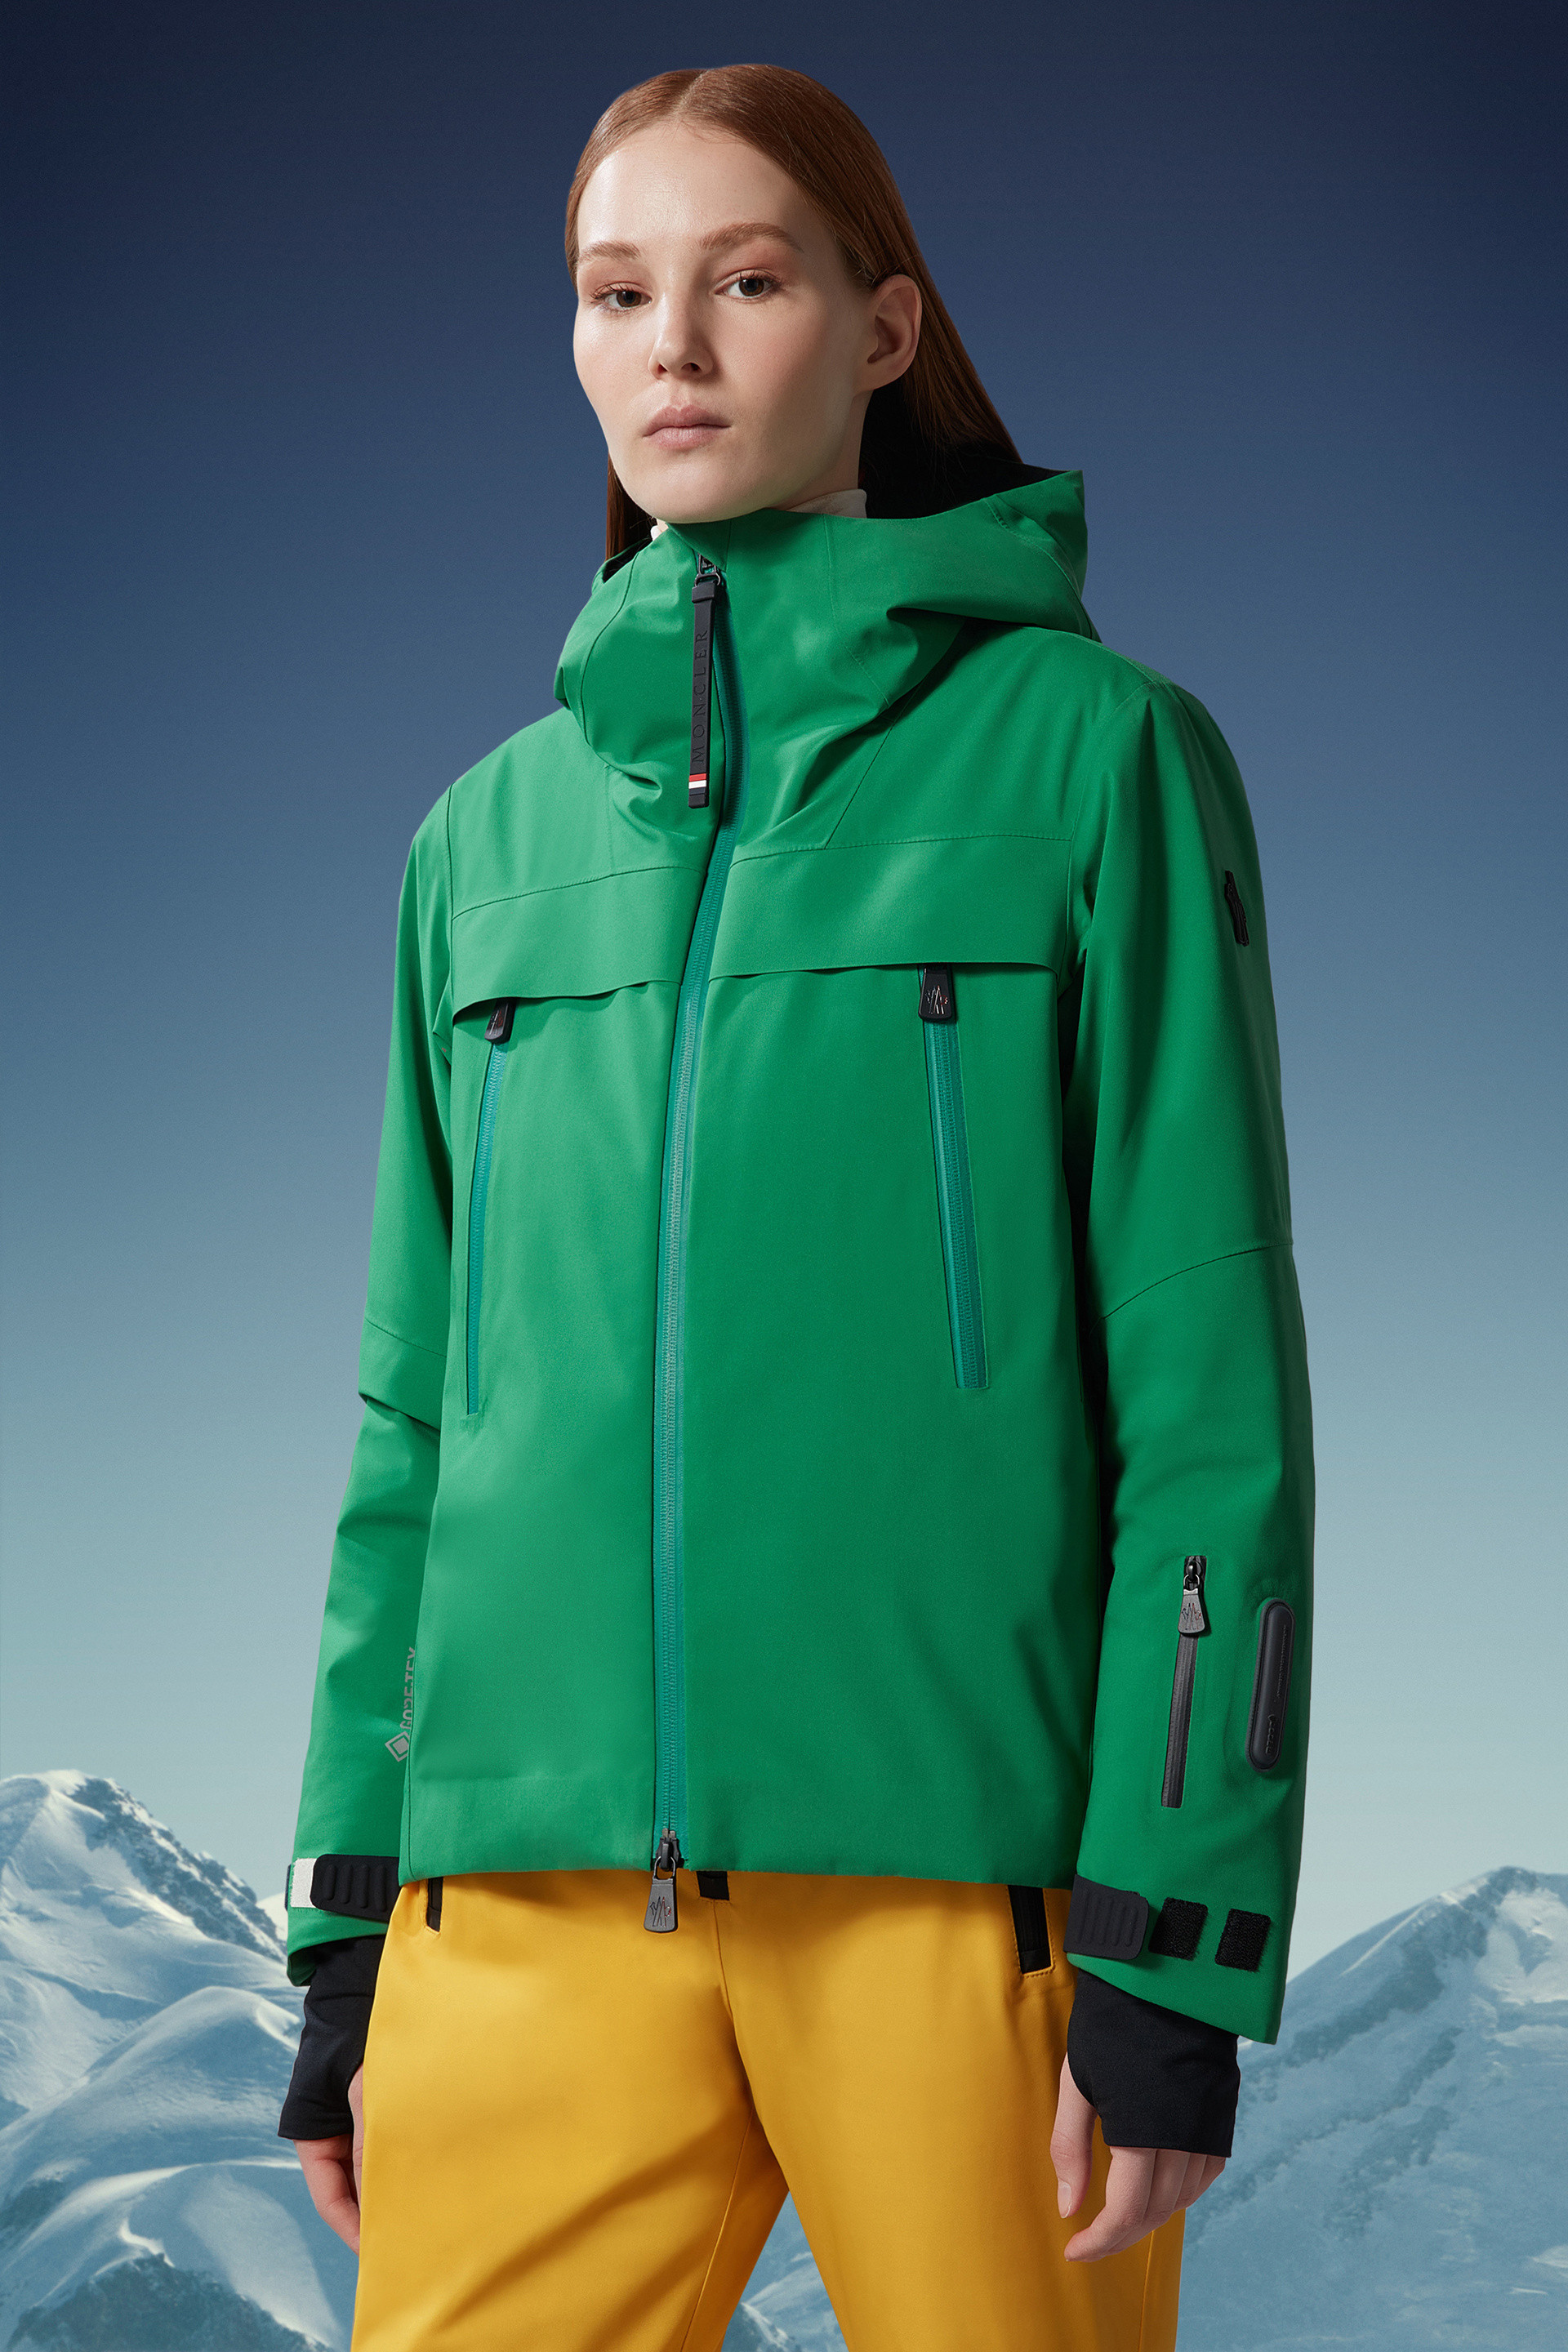 Moncler Grenoble Ski Suit - Women's - Clothing